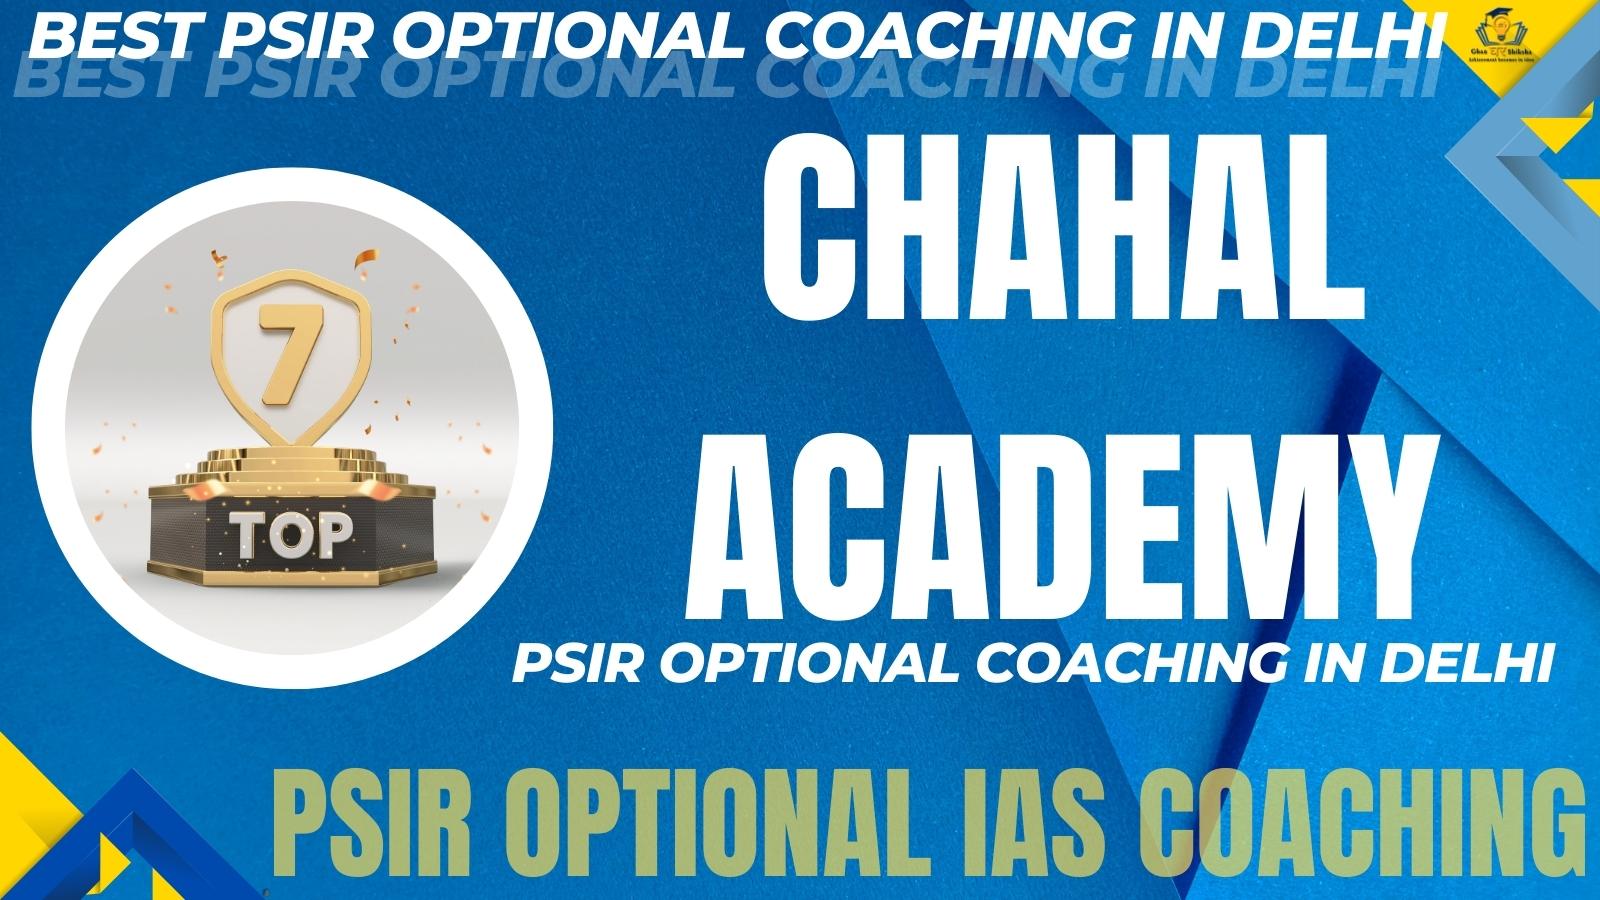 PSIR Optional Coaching Institute of Delhi